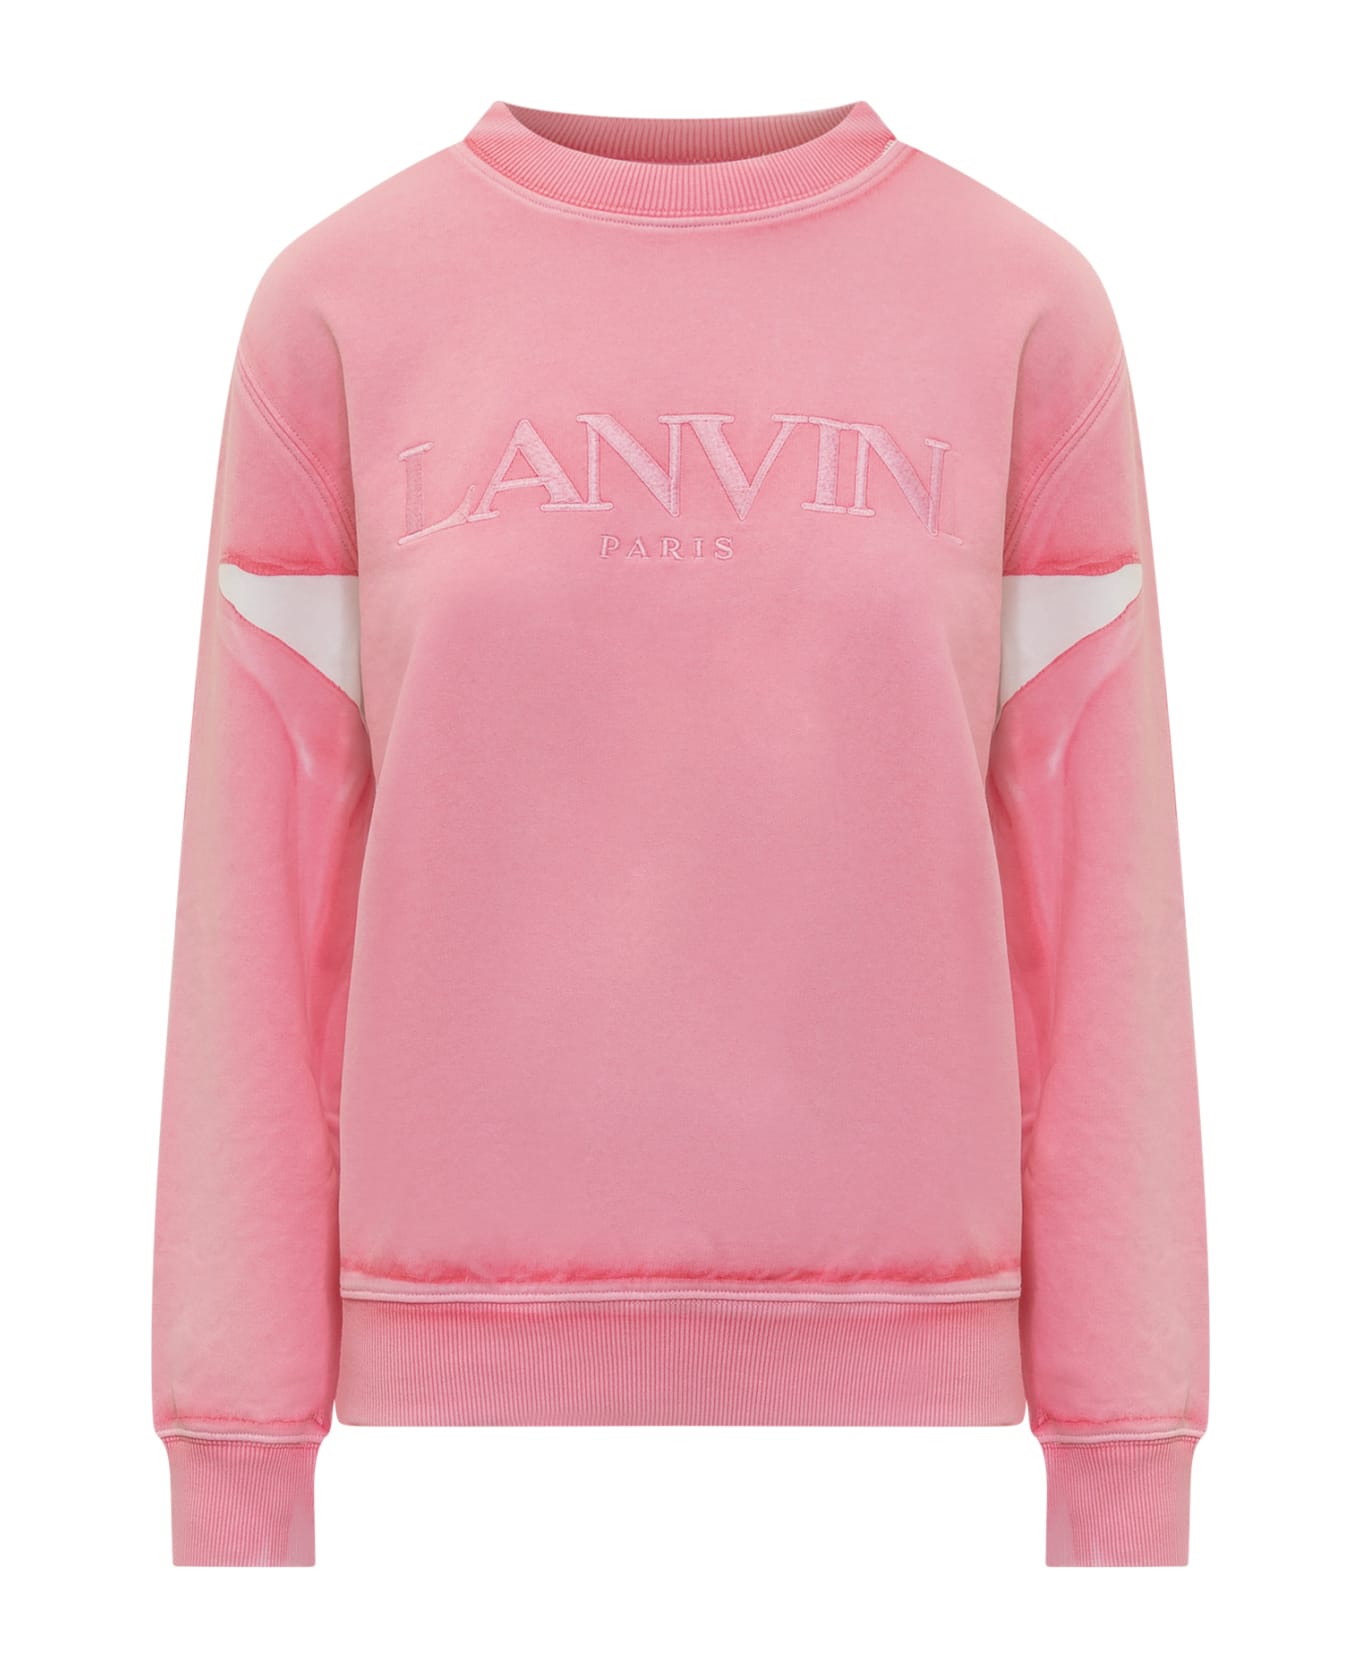 Lanvin Overprinted Sweatshirt - PEONY PINK